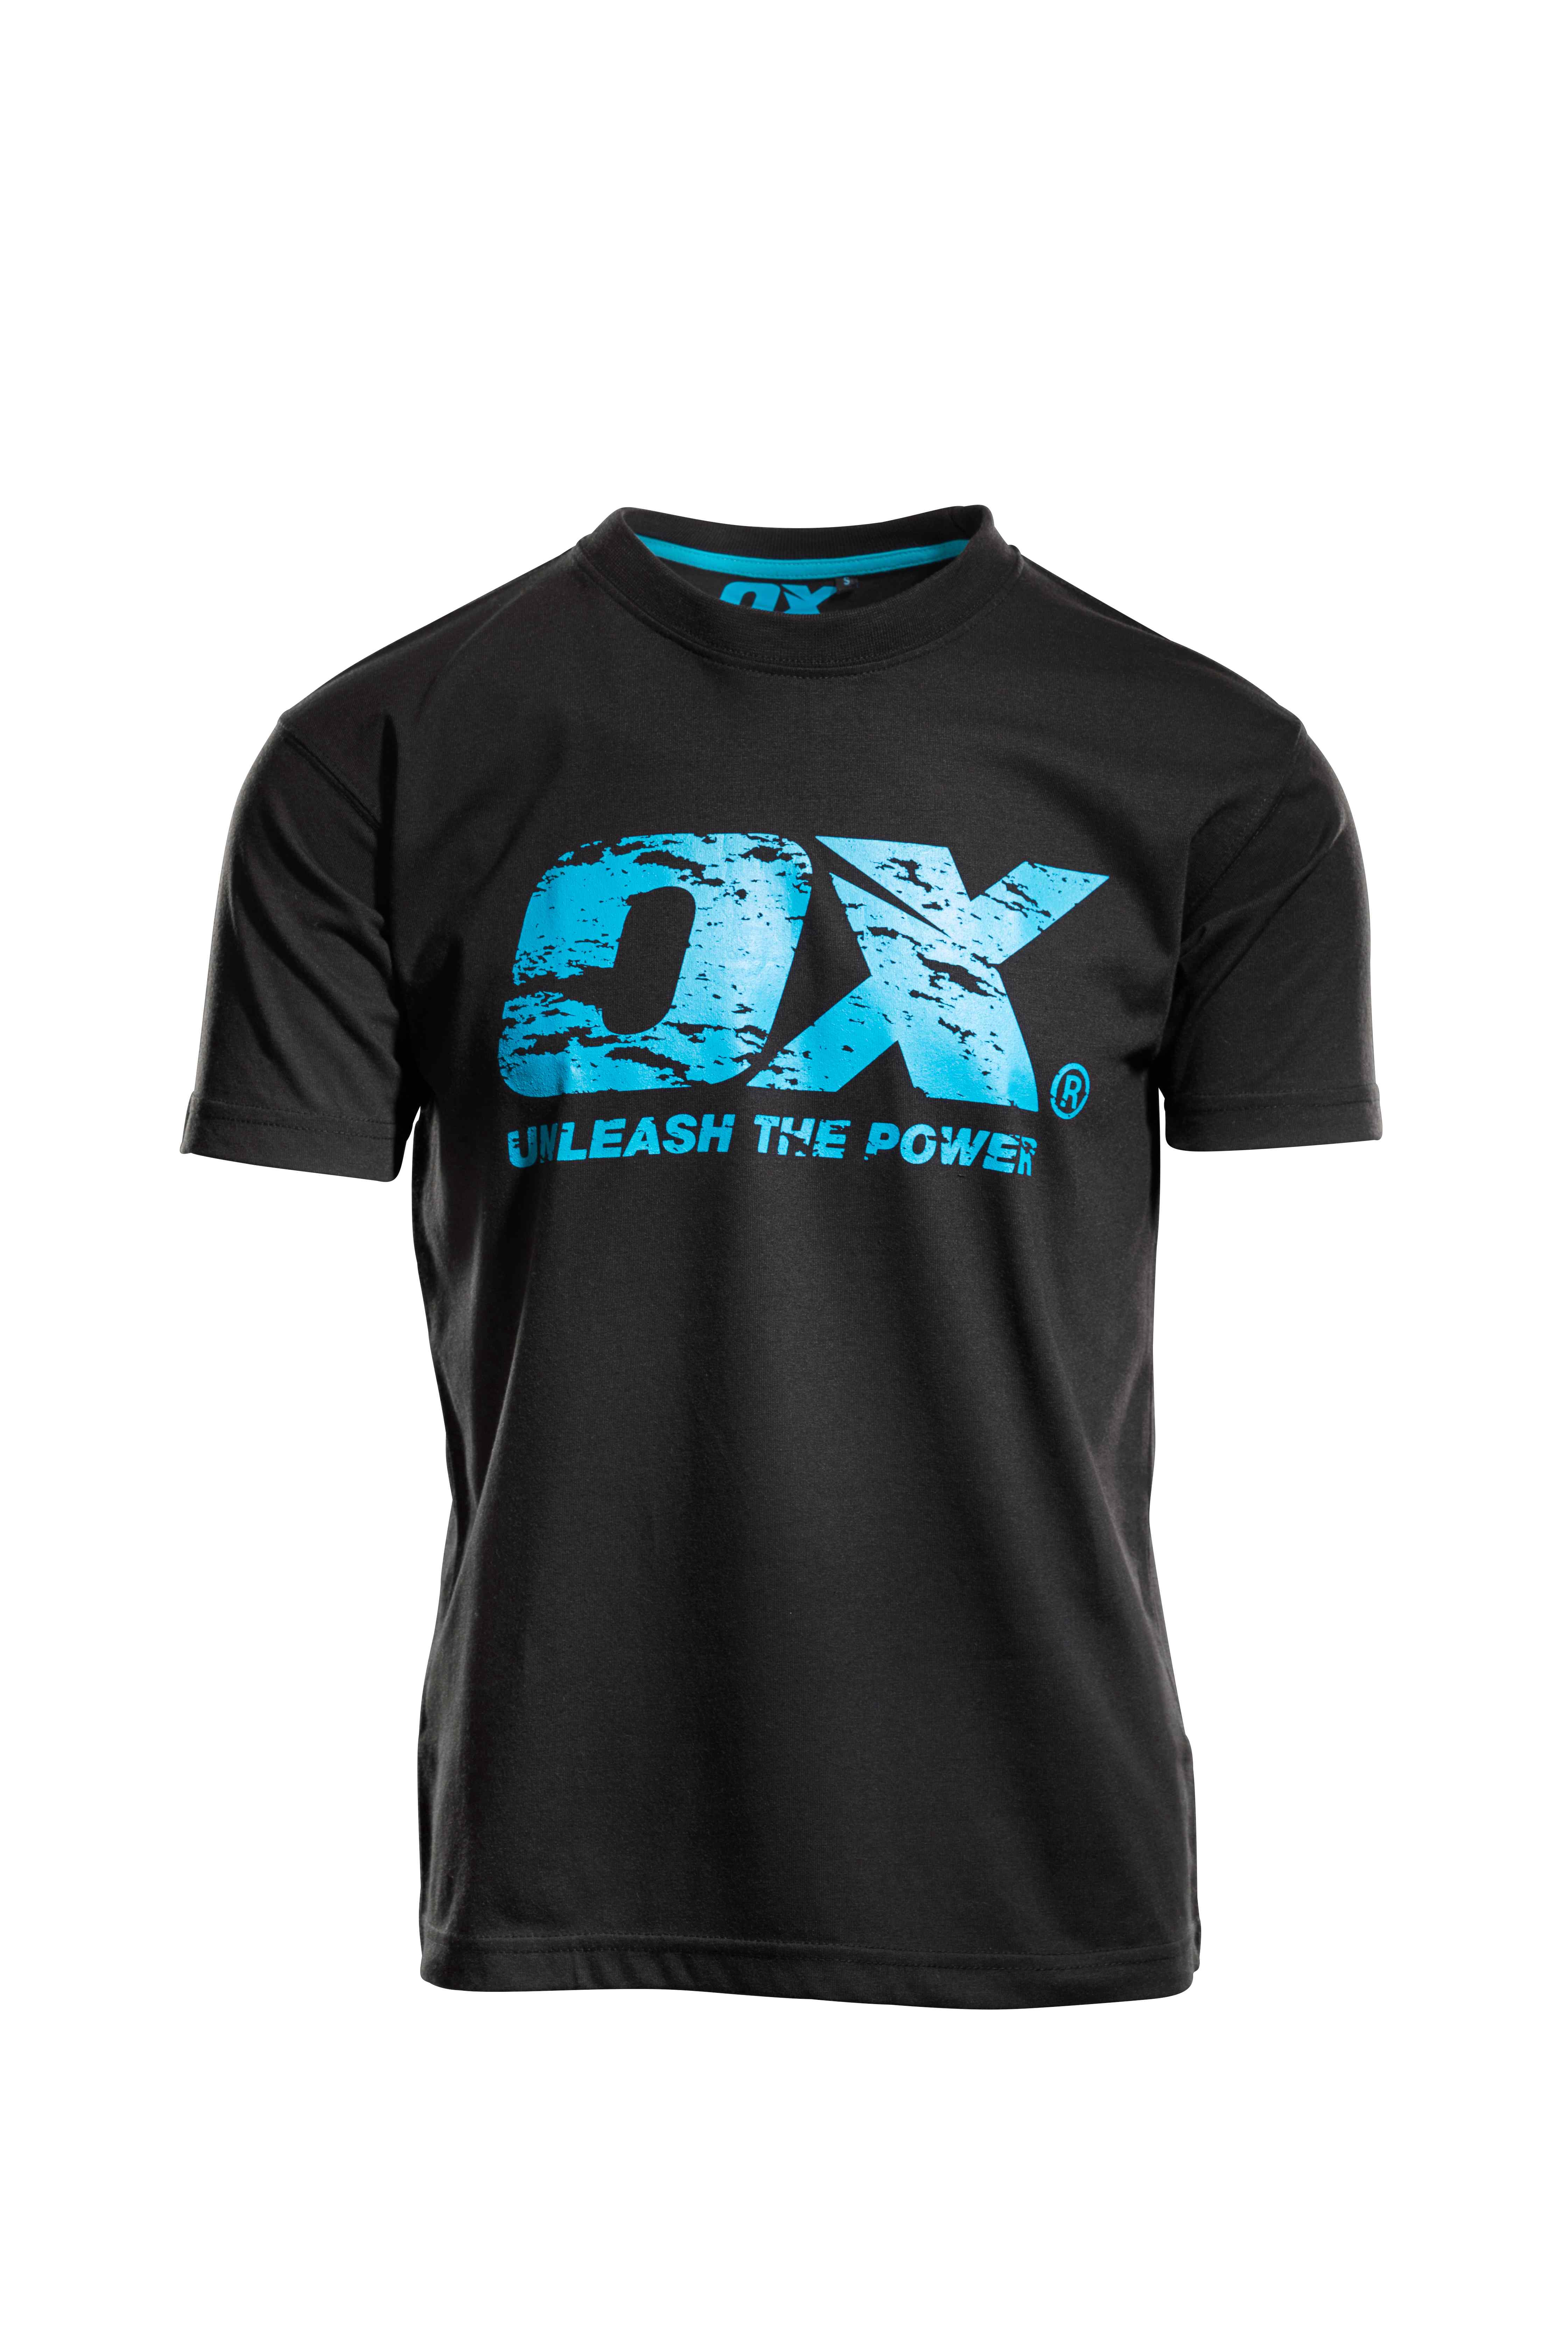 OX Crew Neck T shirt - XL - Black